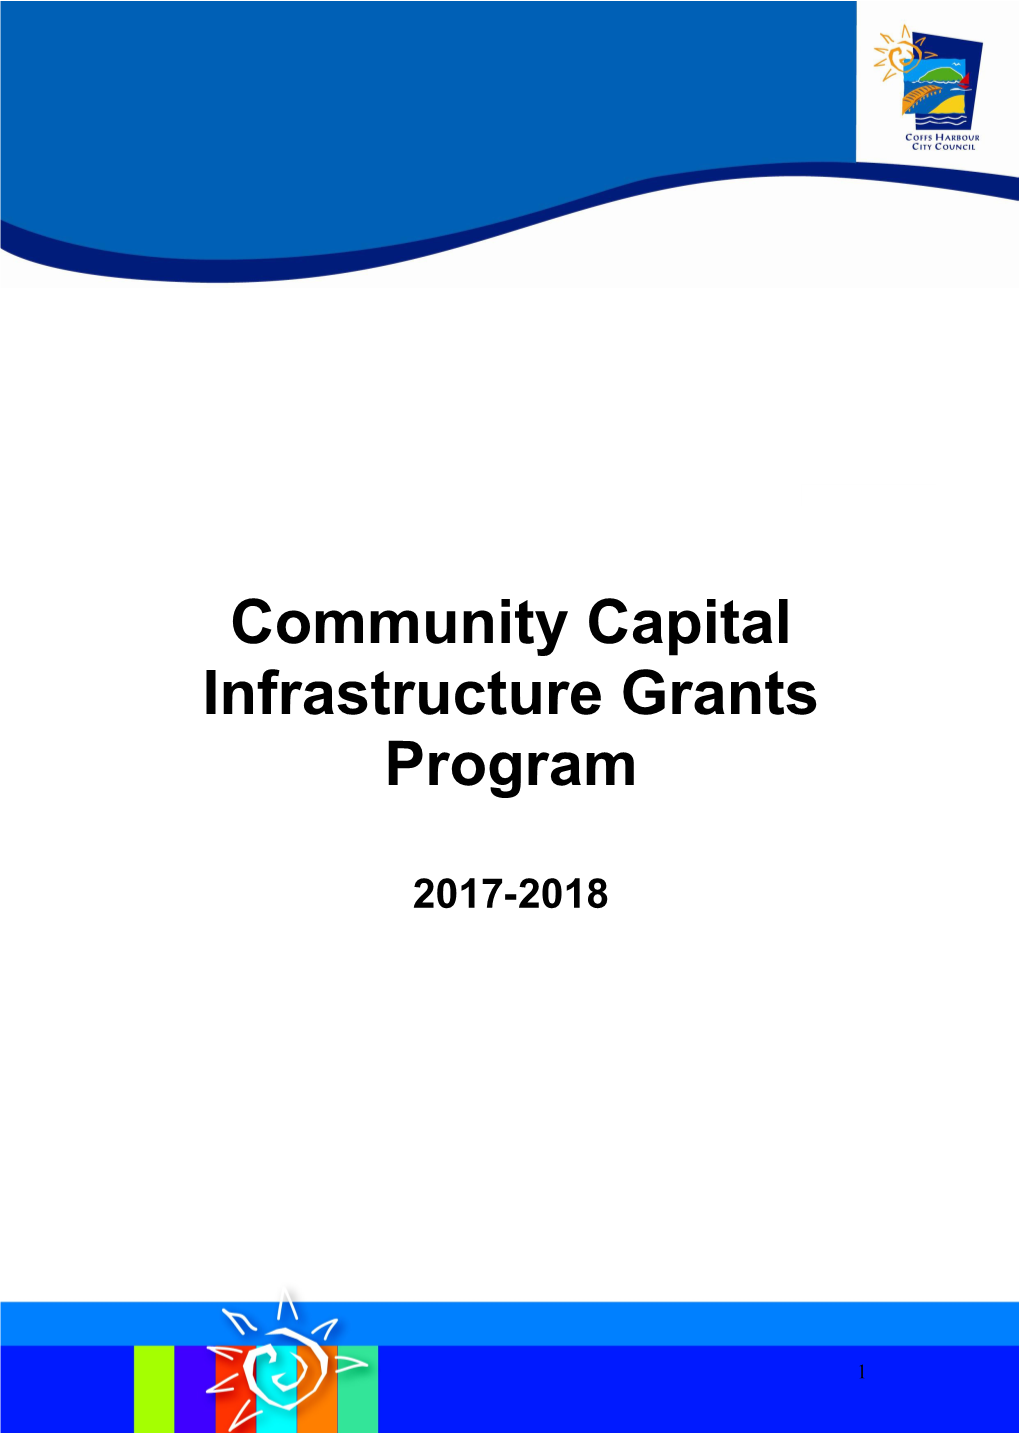 2017-2018 Community Capital Infrastructure Grants Program